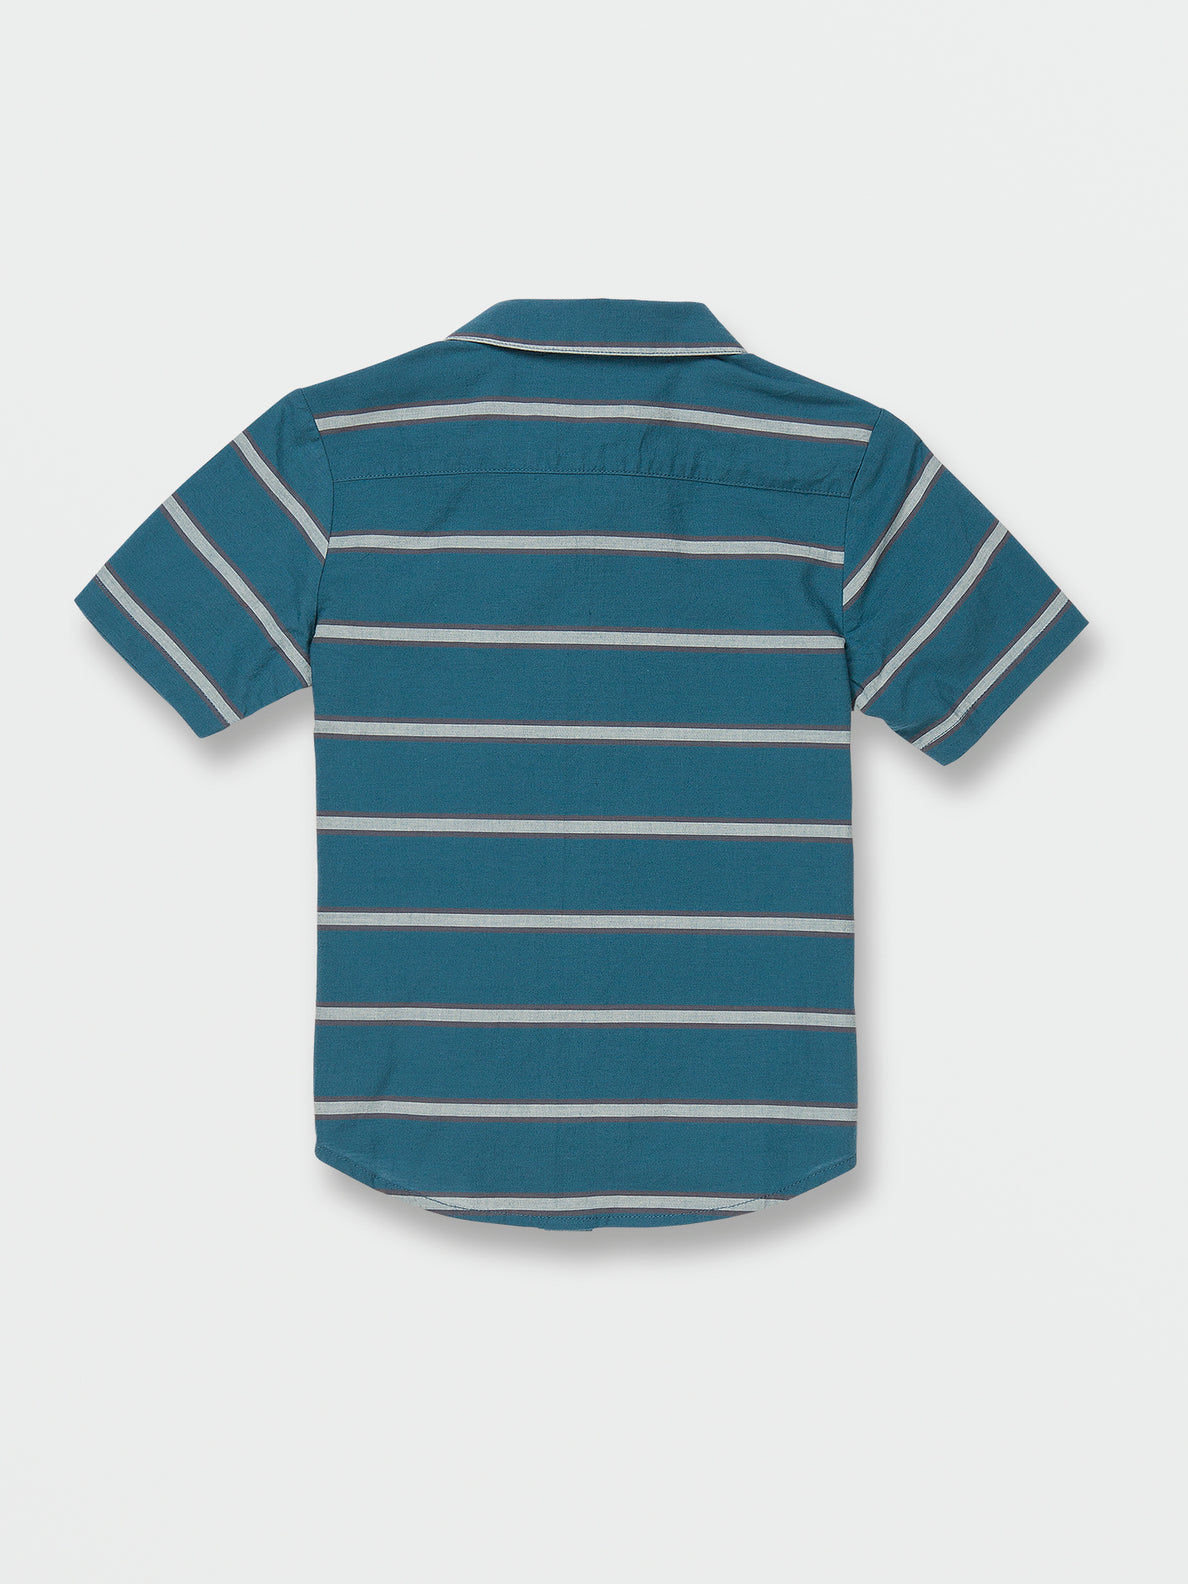 Little Boys Sayzon Stripe Short Sleeve Shirt - Aged Indigo (Y0412331_AIN) [B]